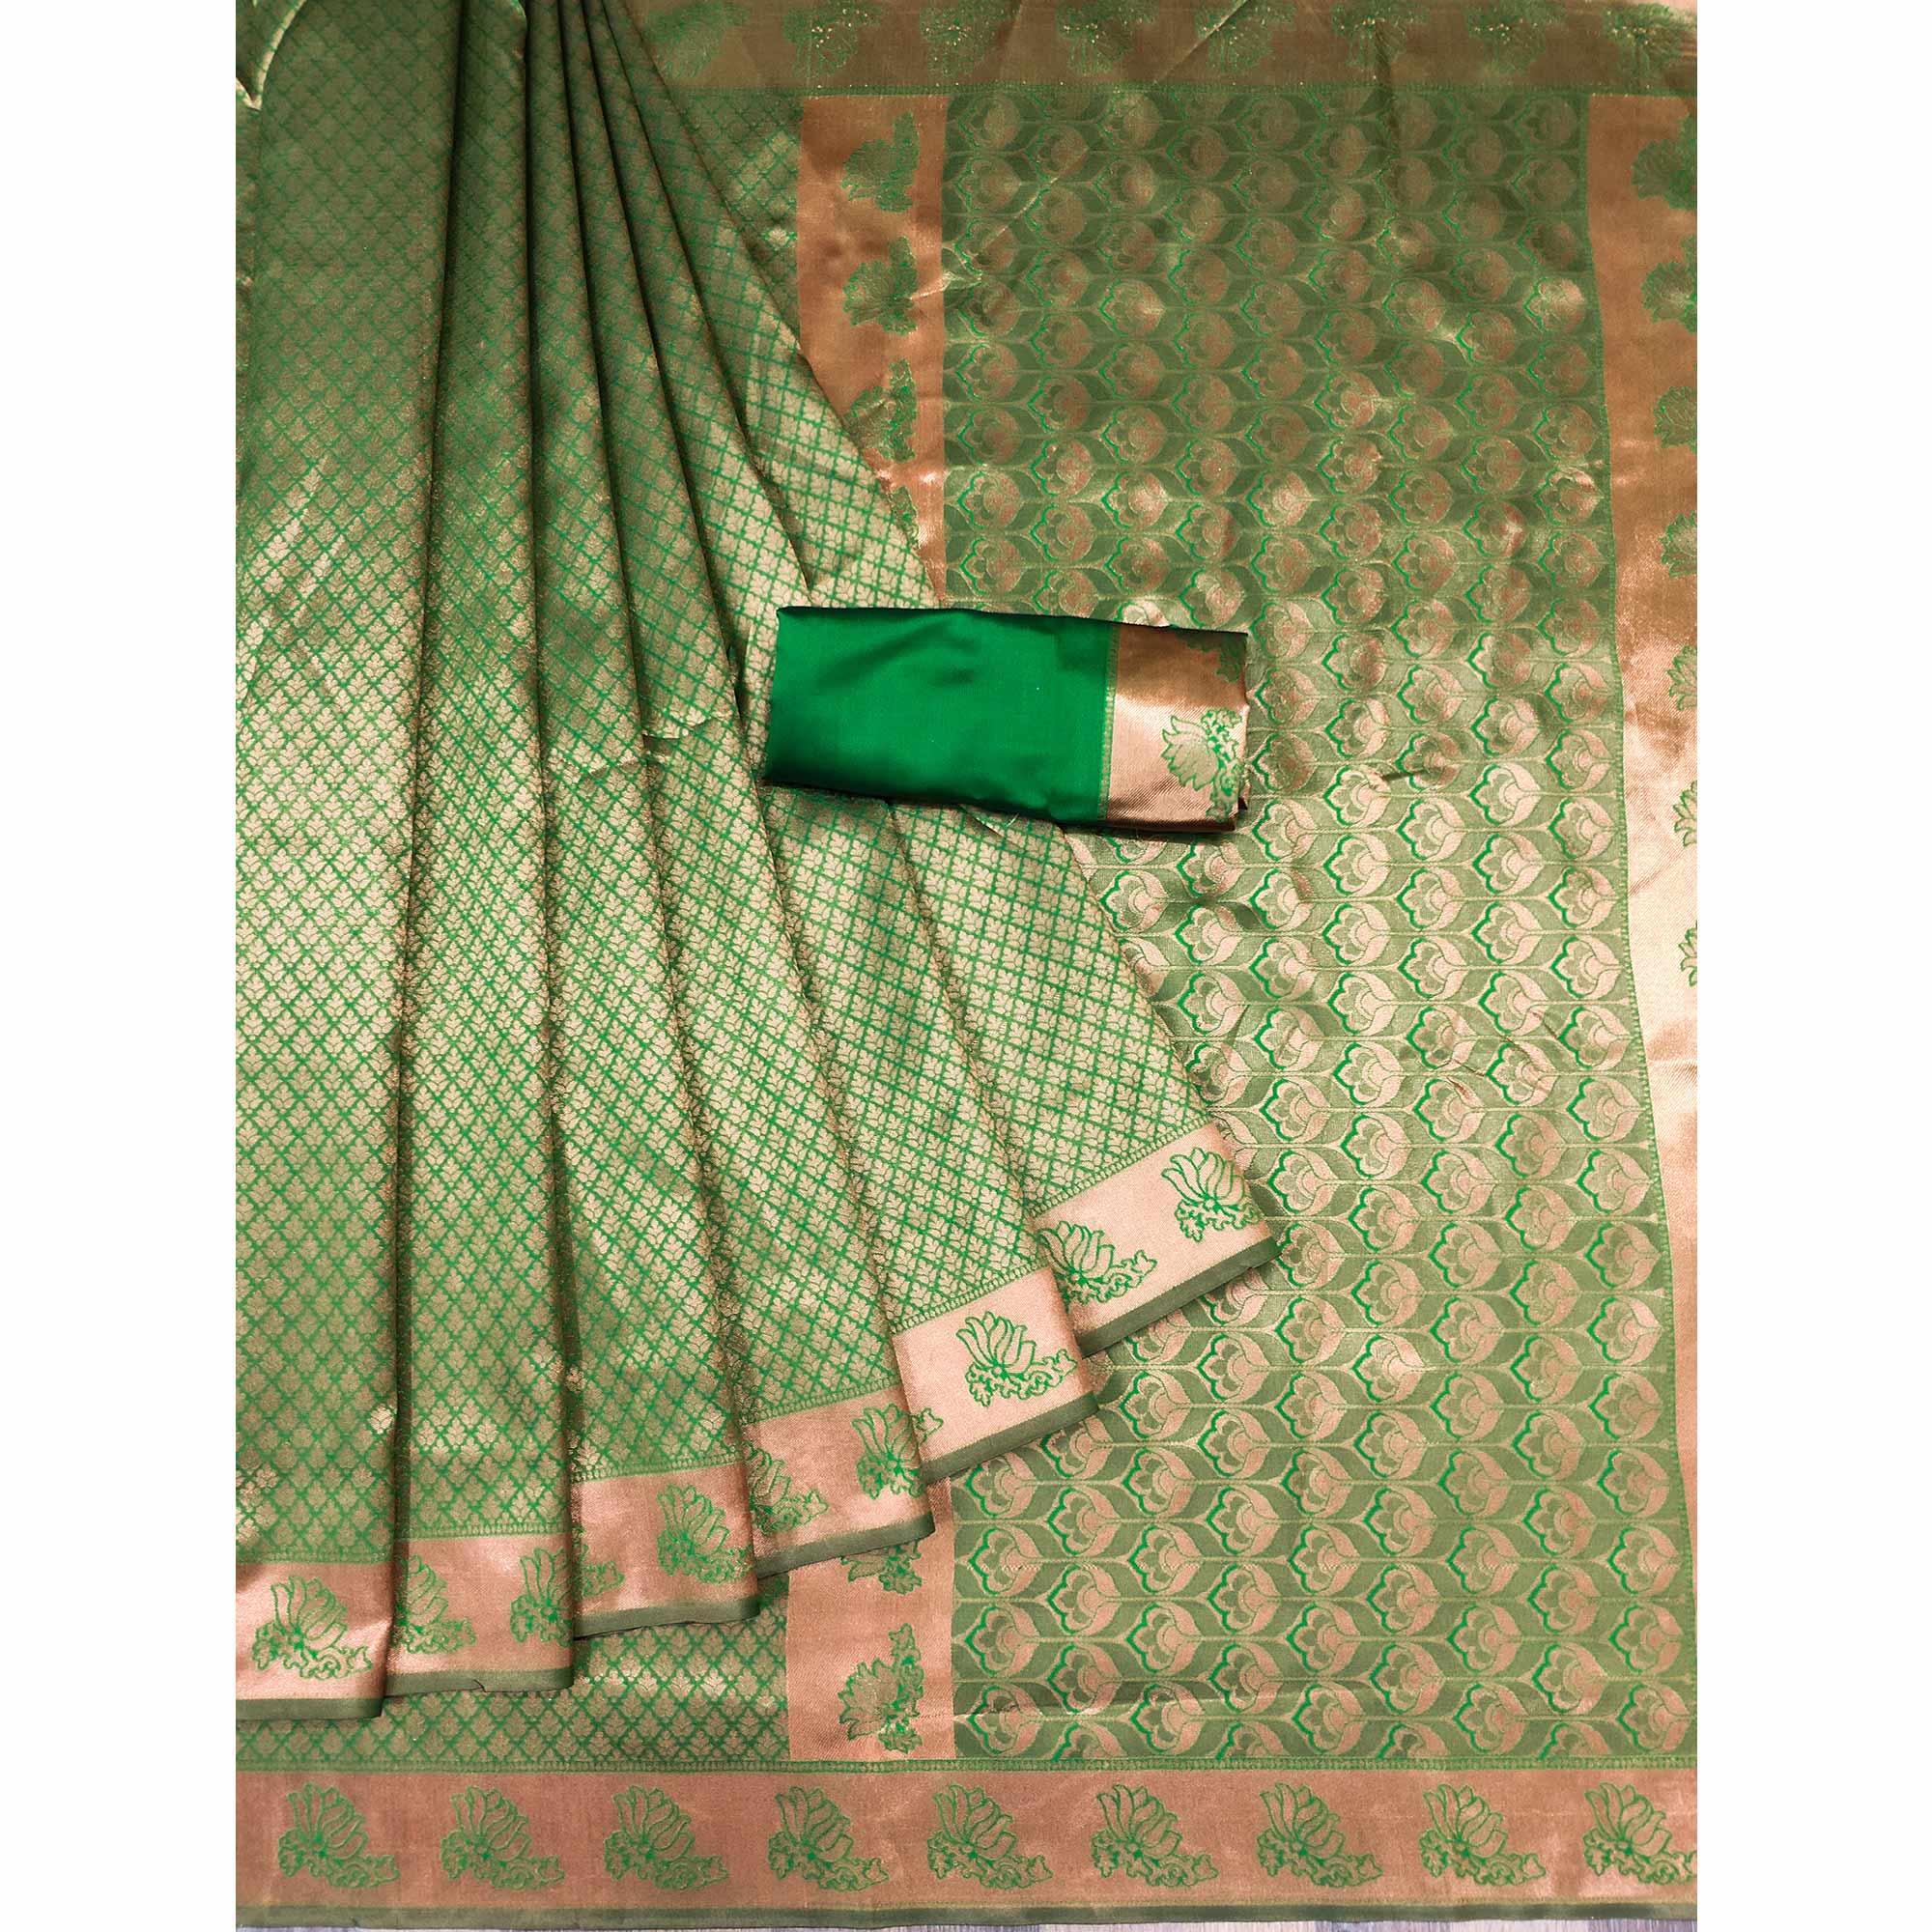 Green Woven Banarasi Silk Saree - Peachmode